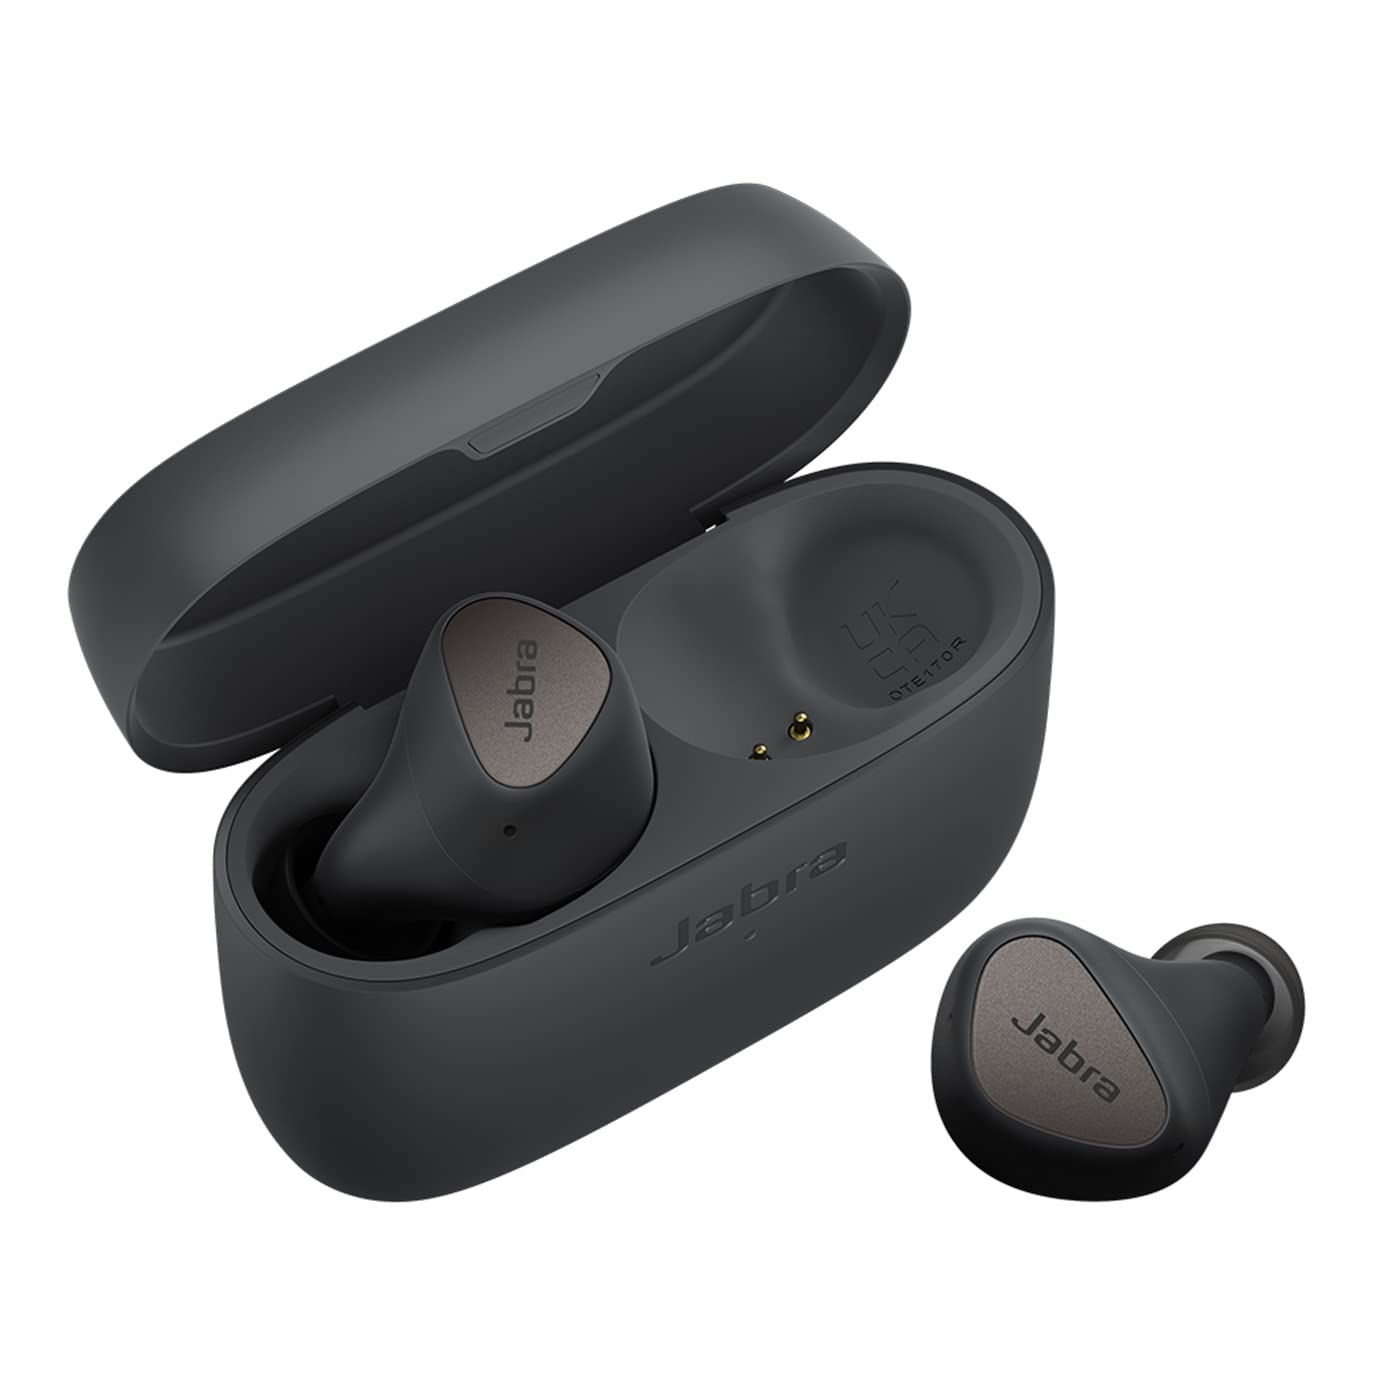 Jabra Elite 5 Headphone Review - Consumer Reports